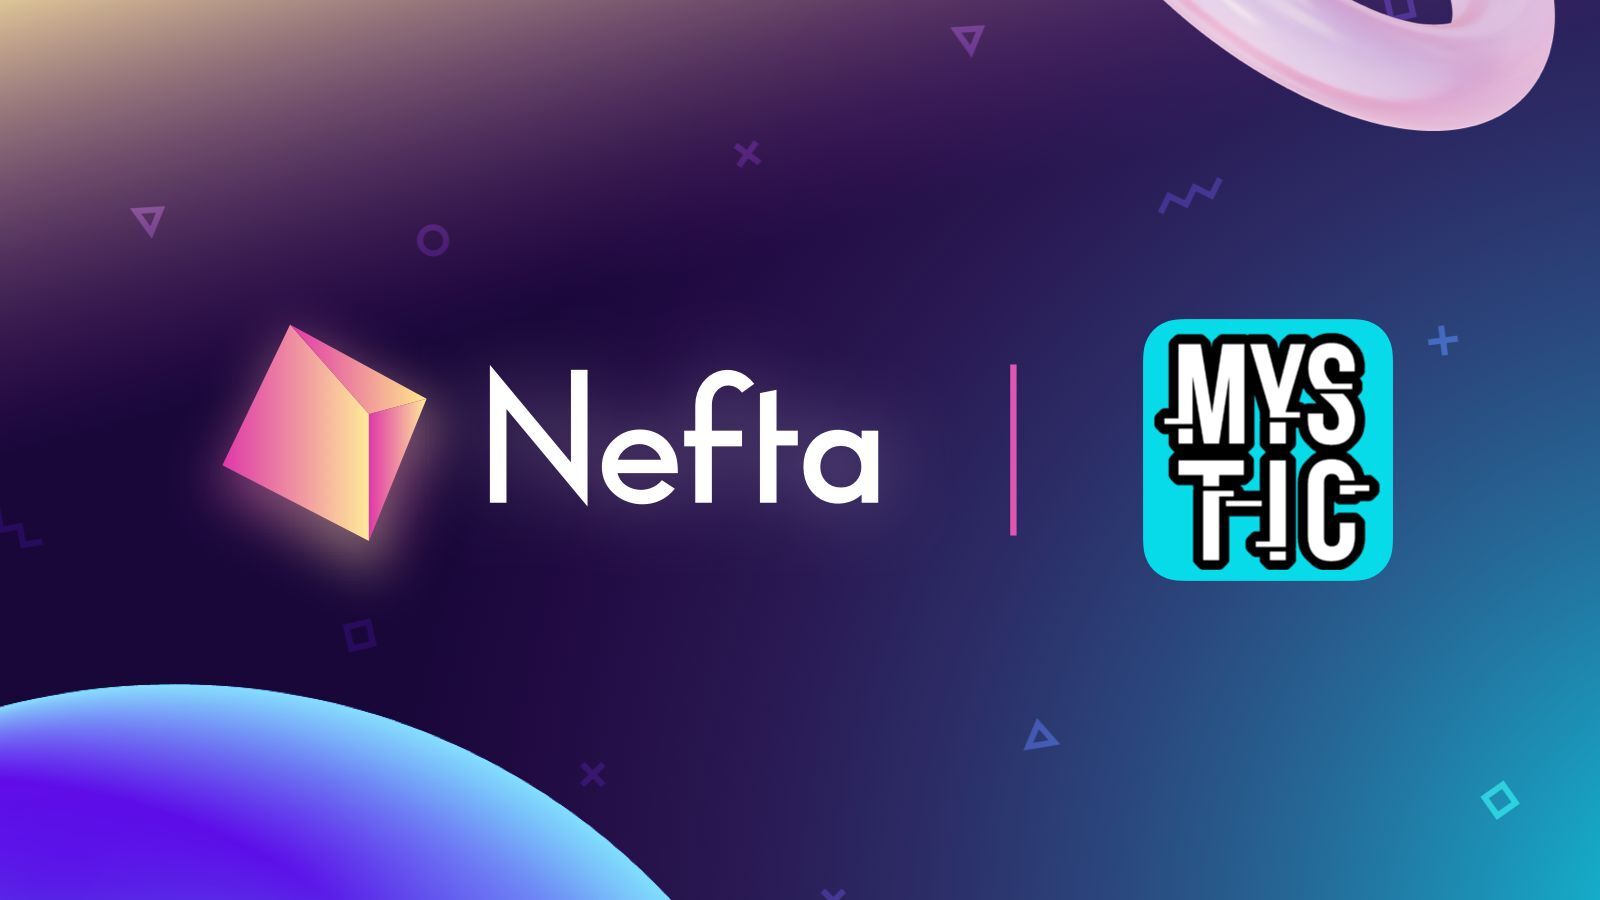 Nefta and Mystic Games begin development of new game